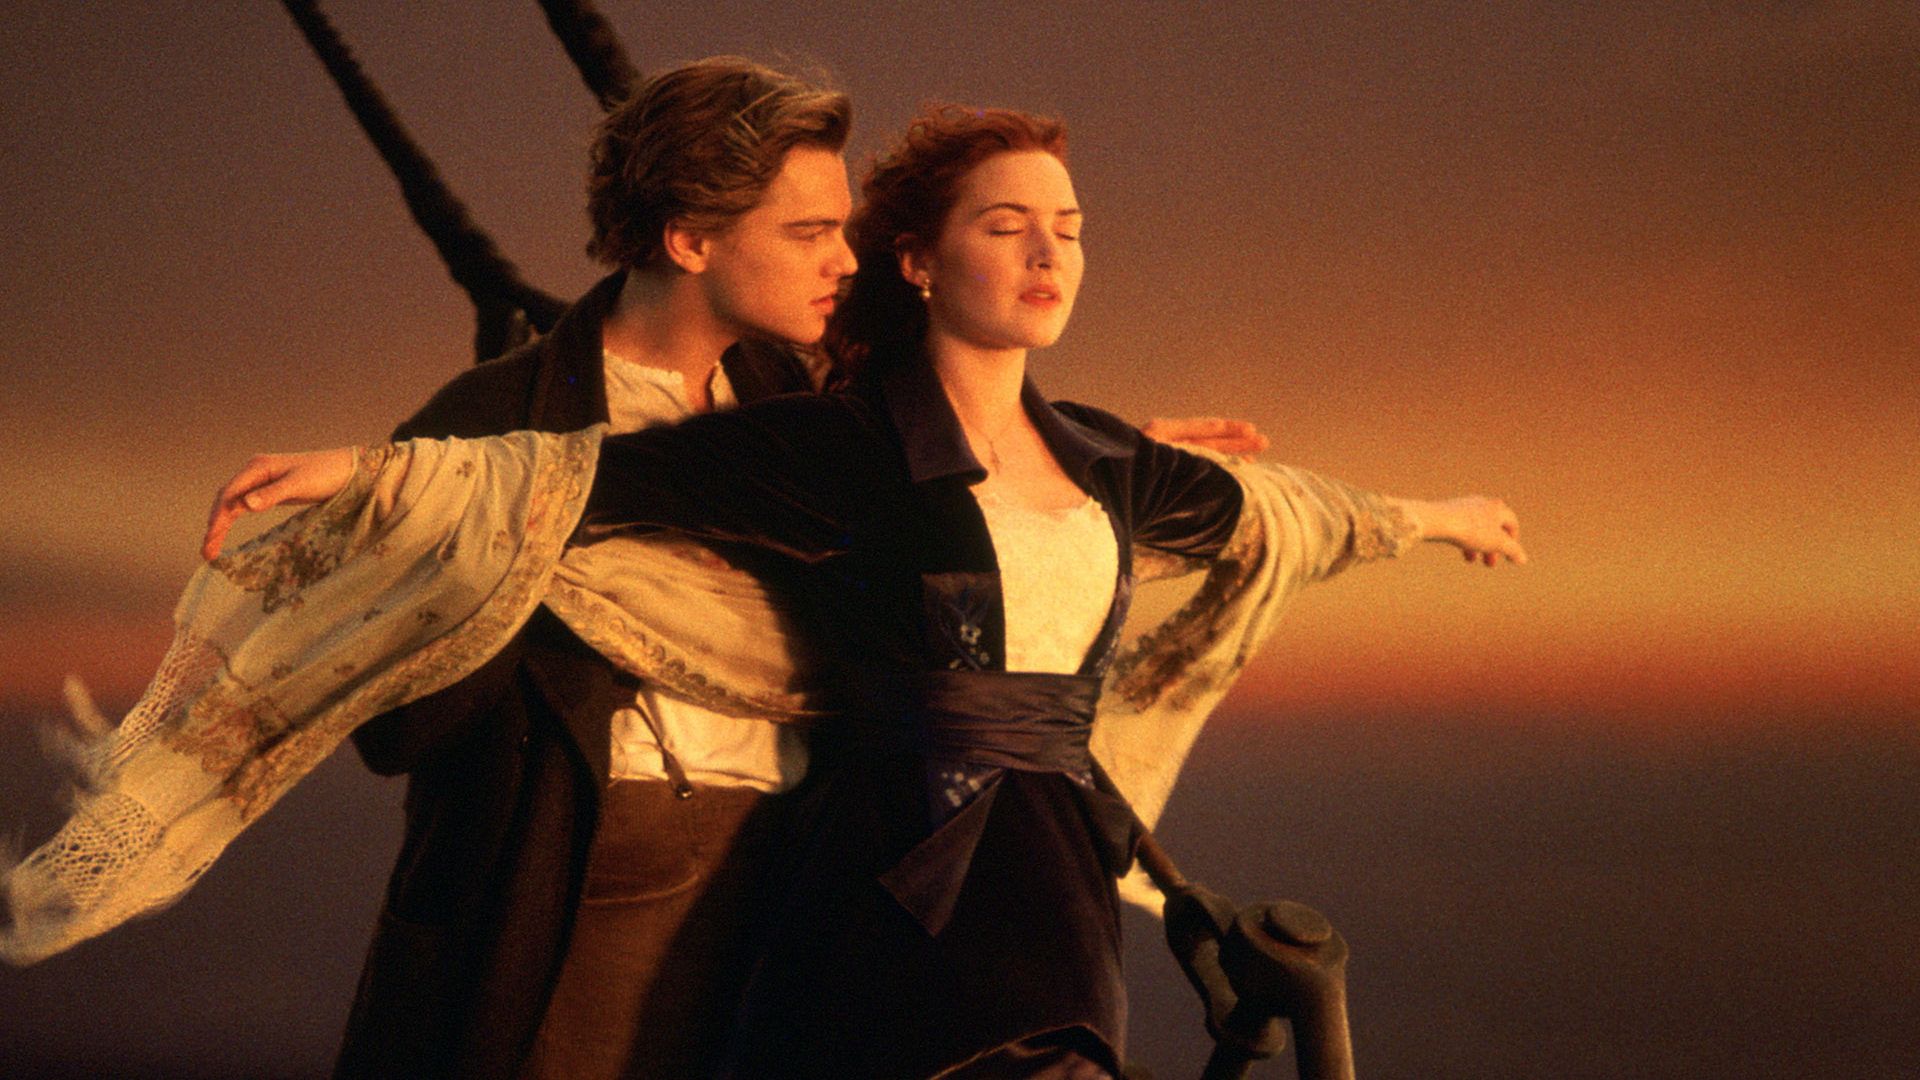  Titanic Hintergrundbild 1920x1080. Titanic Romance Movies Kate Winslet and Leonardo DiCaprio Wa.videolan.org